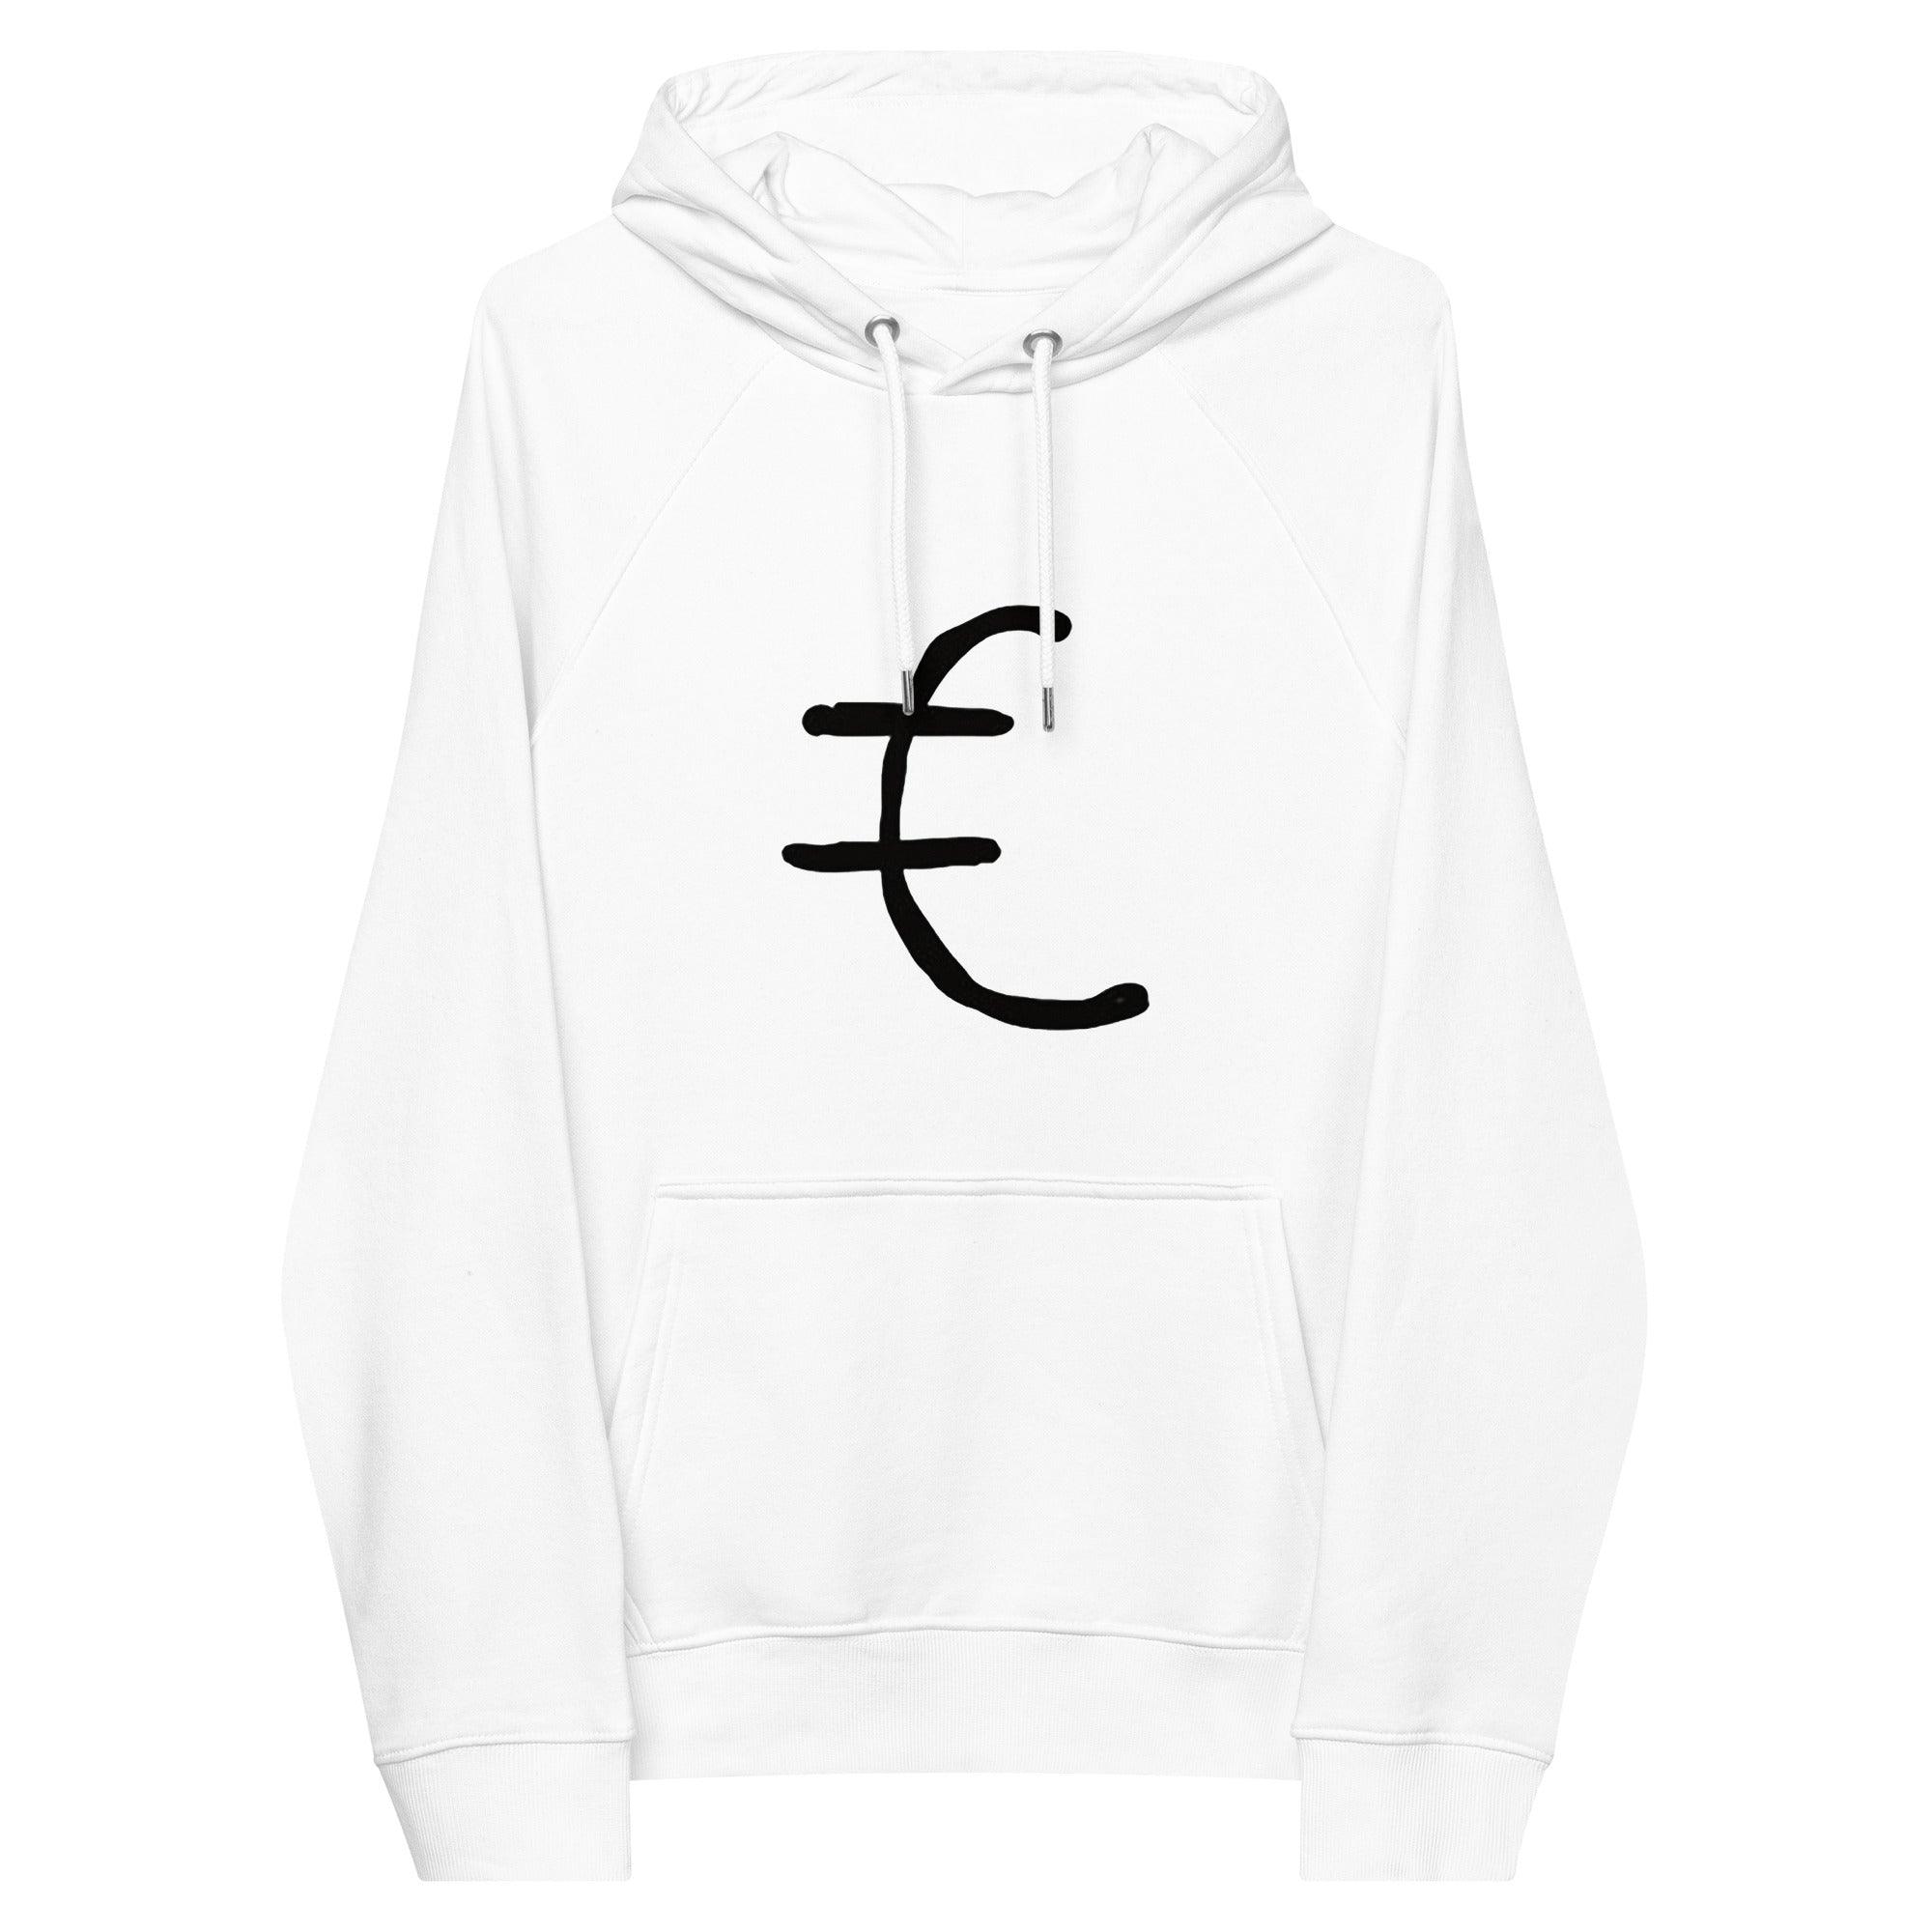 Euro Symbol Pullover Hoodie - InvestmenTees